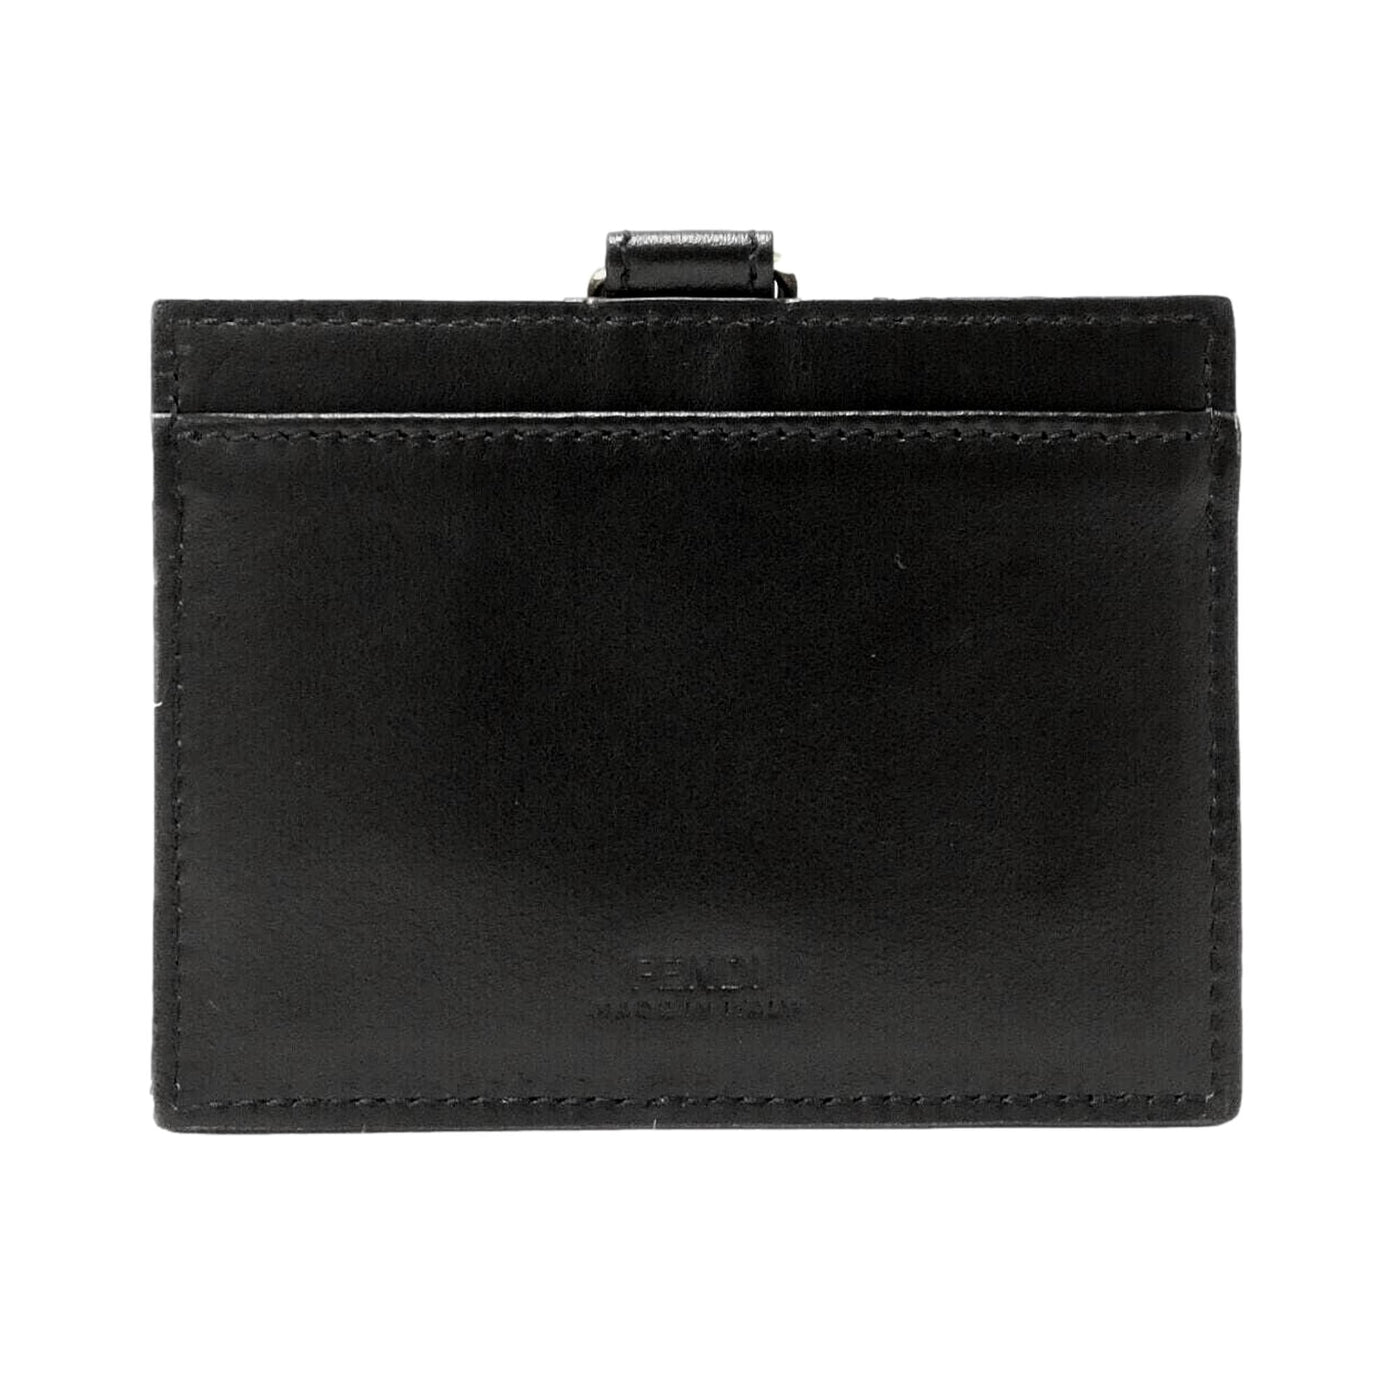 Fendi Fendace Black Leather Card Case Wallet Lanyard - LUXURYMRKT